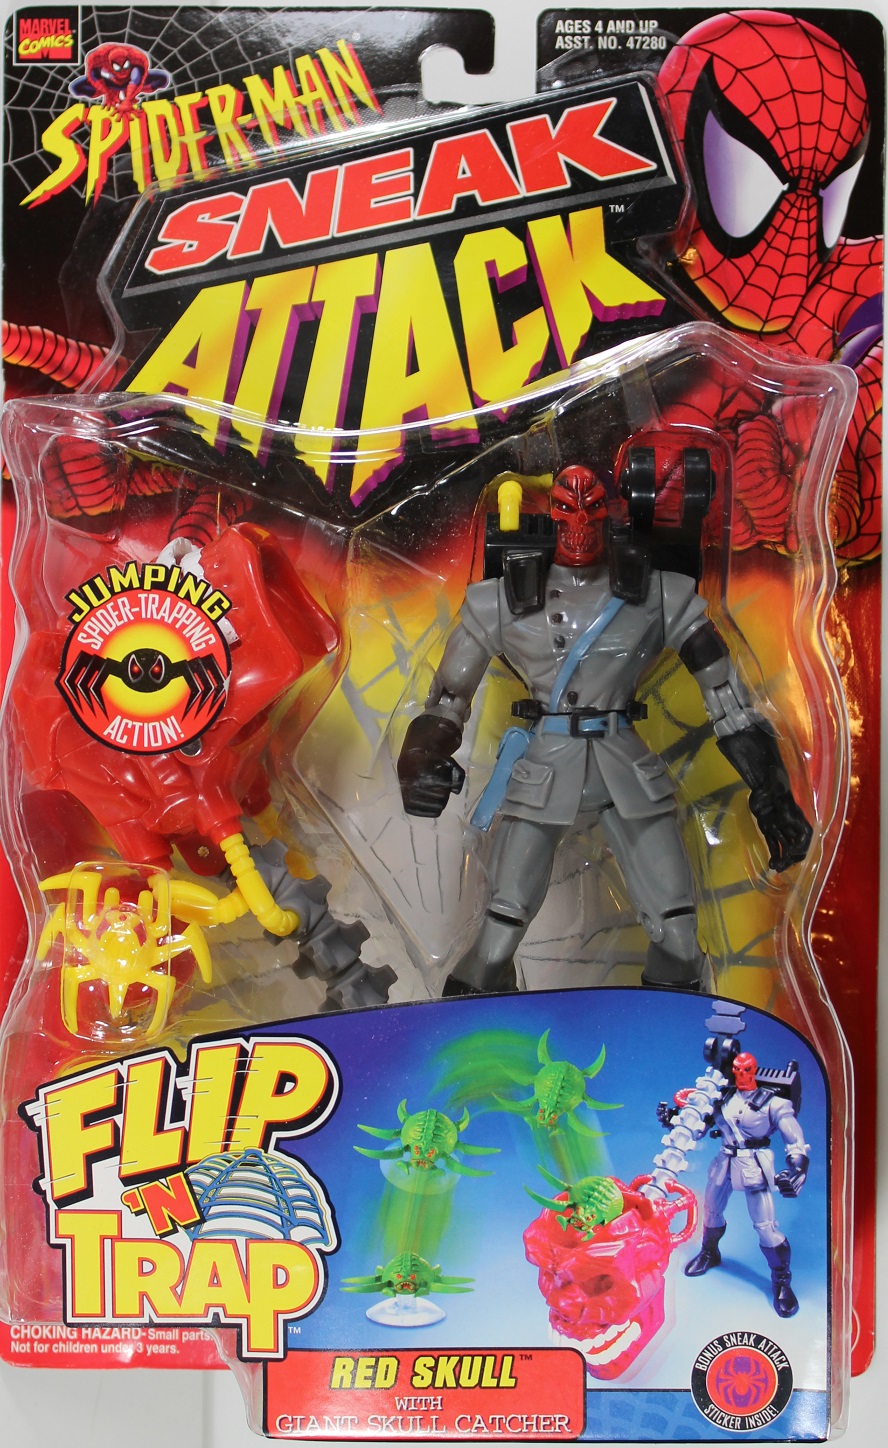 Toy Biz Sneak Attack Flip 'n Trap Red Skull Figure Review